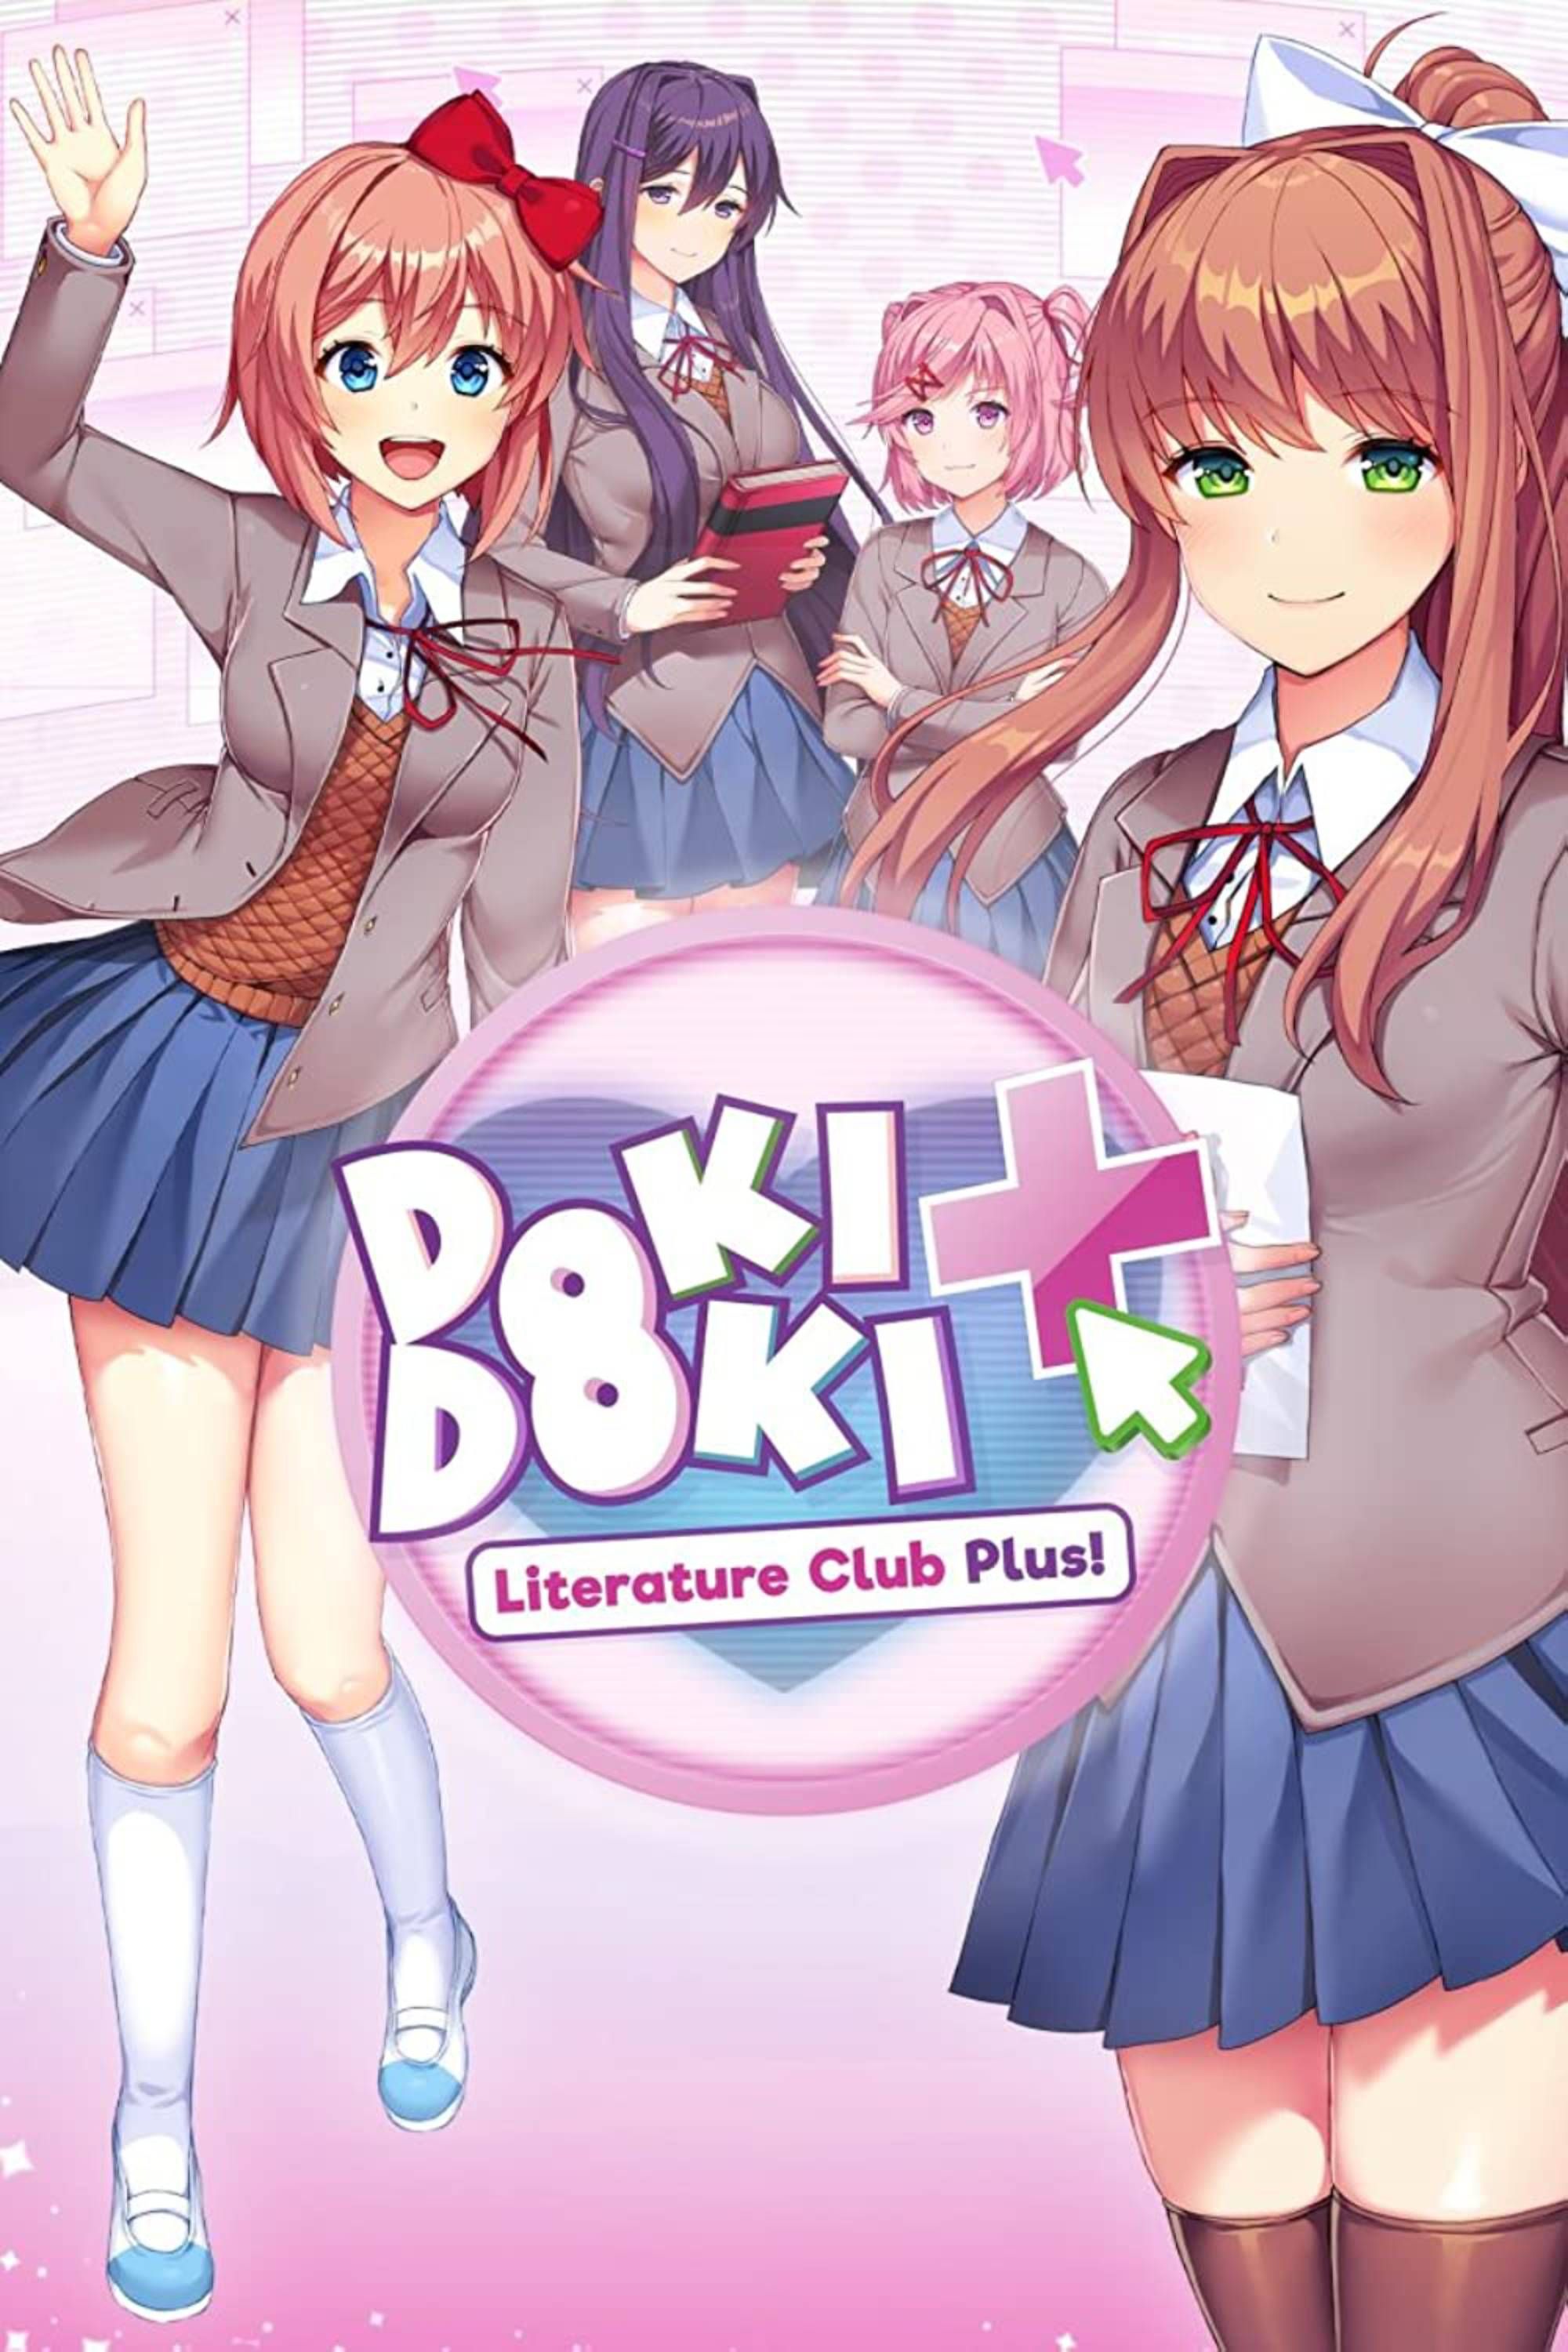 How to Unlock All Endings in Doki Doki Literature Club Plus